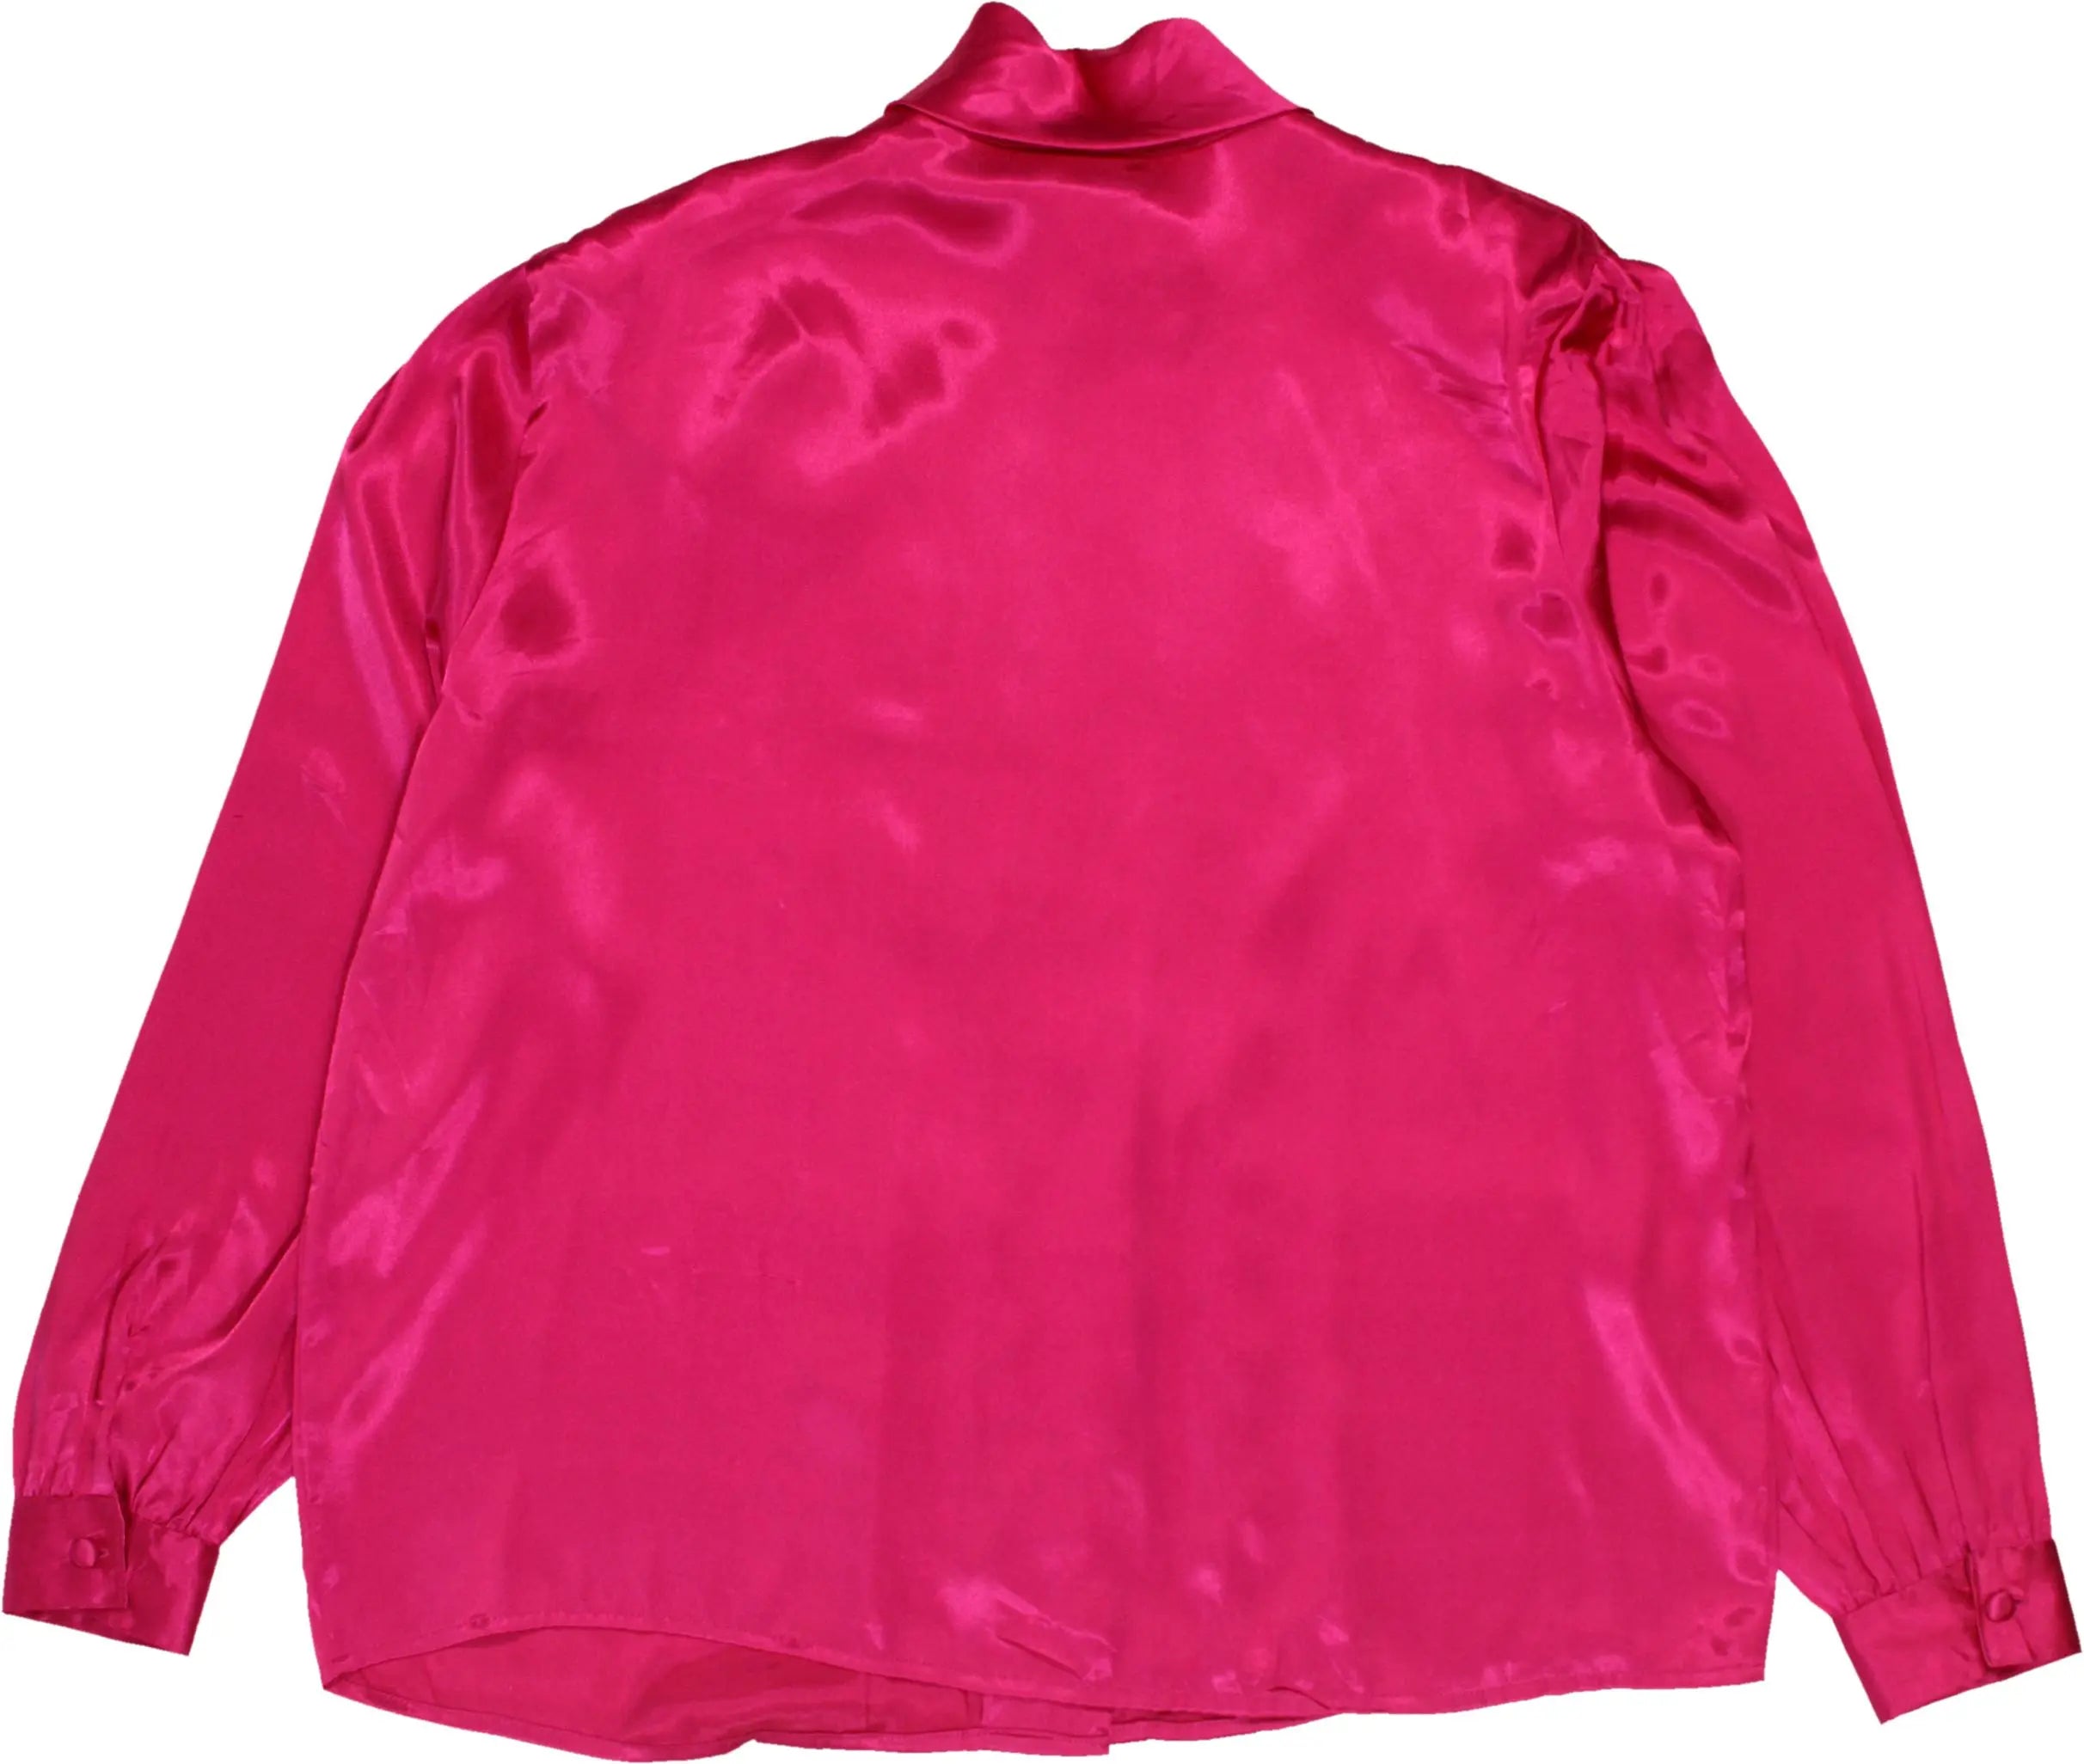 Karen Scott - Pink Blouse- ThriftTale.com - Vintage and second handclothing